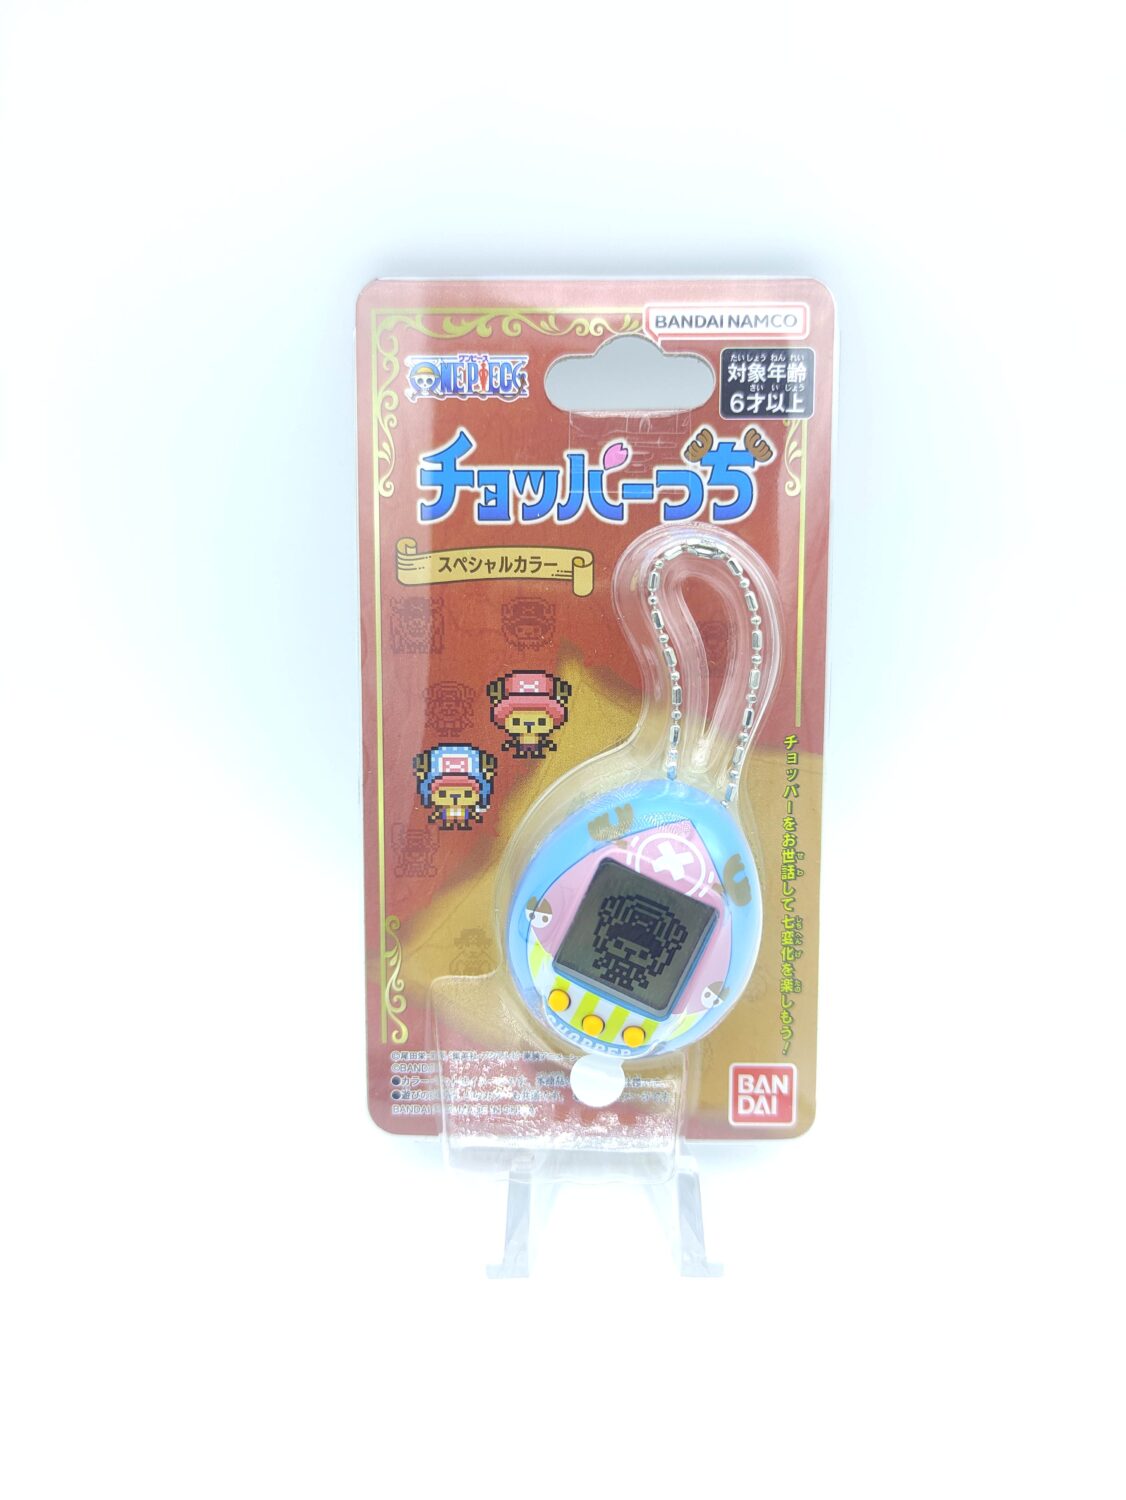 Tamagotchi Bandai Nano One Piece Chopper Special Color Toy Boutique-Tamagotchis